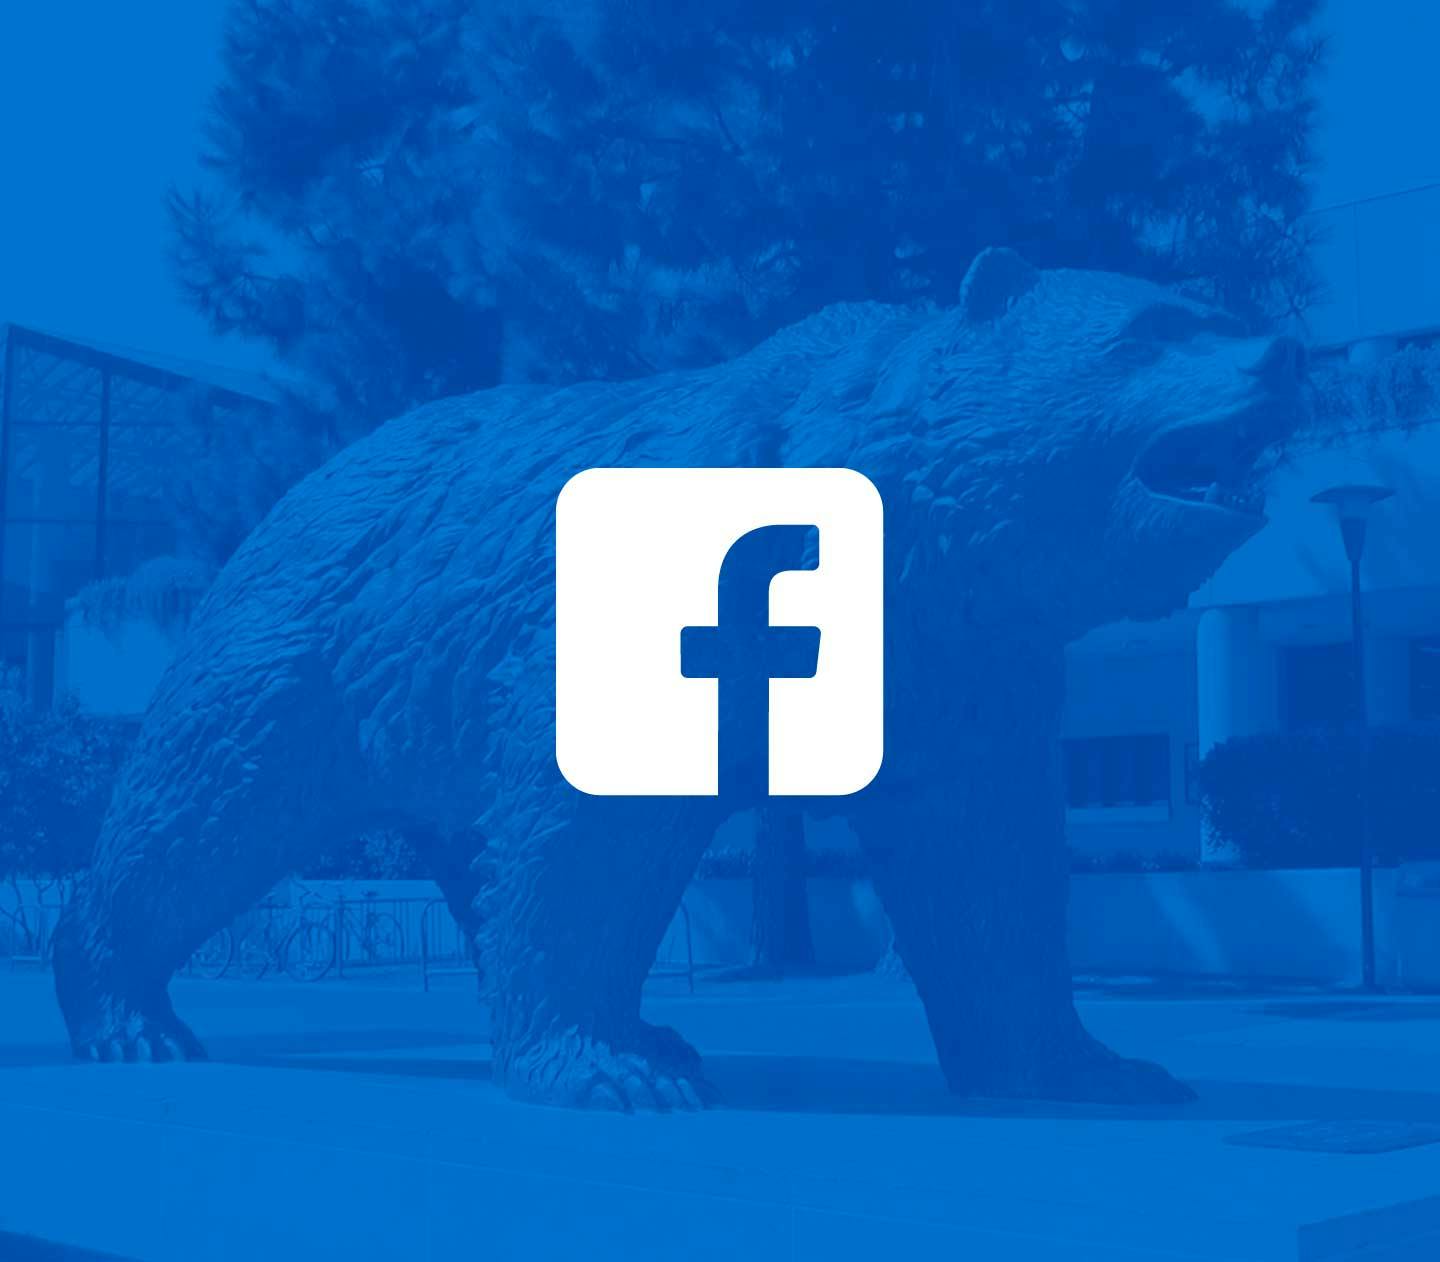 Facebook logo and bruin statue